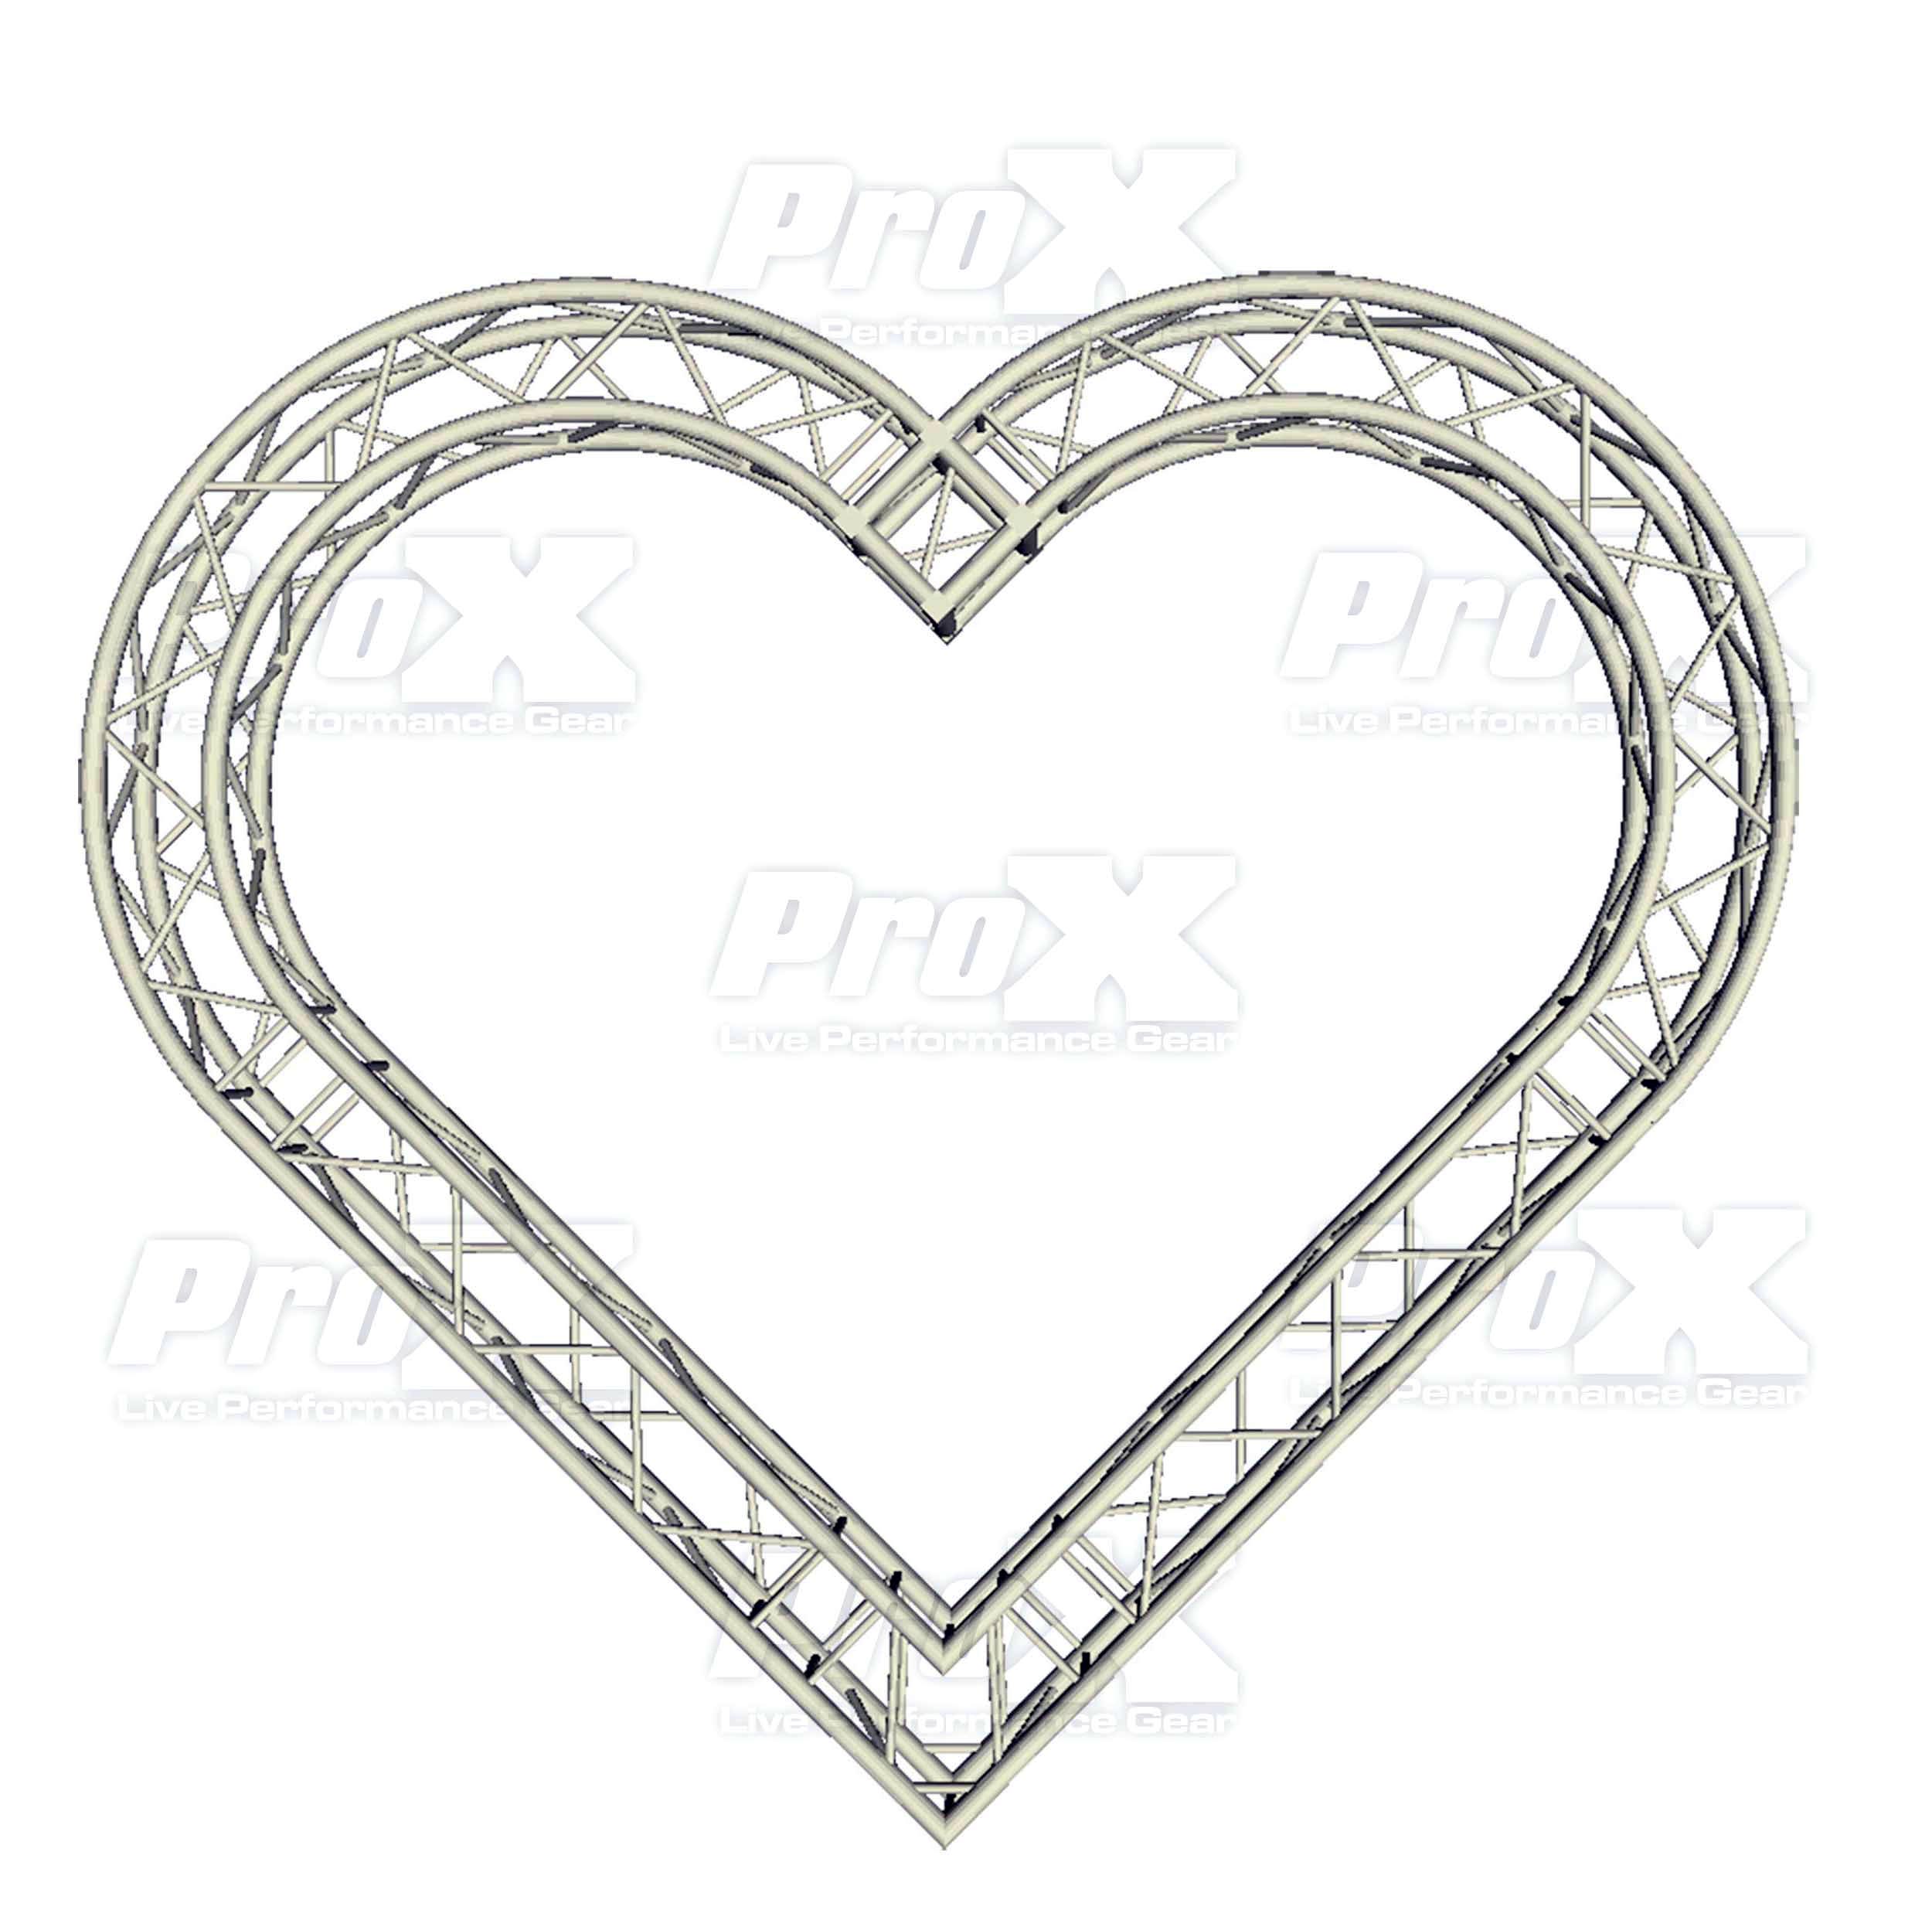 Pro X Wedding Heart10fT Decorative Circle Trussing Unit with 8 F34 Truss Segments XT-HEART984